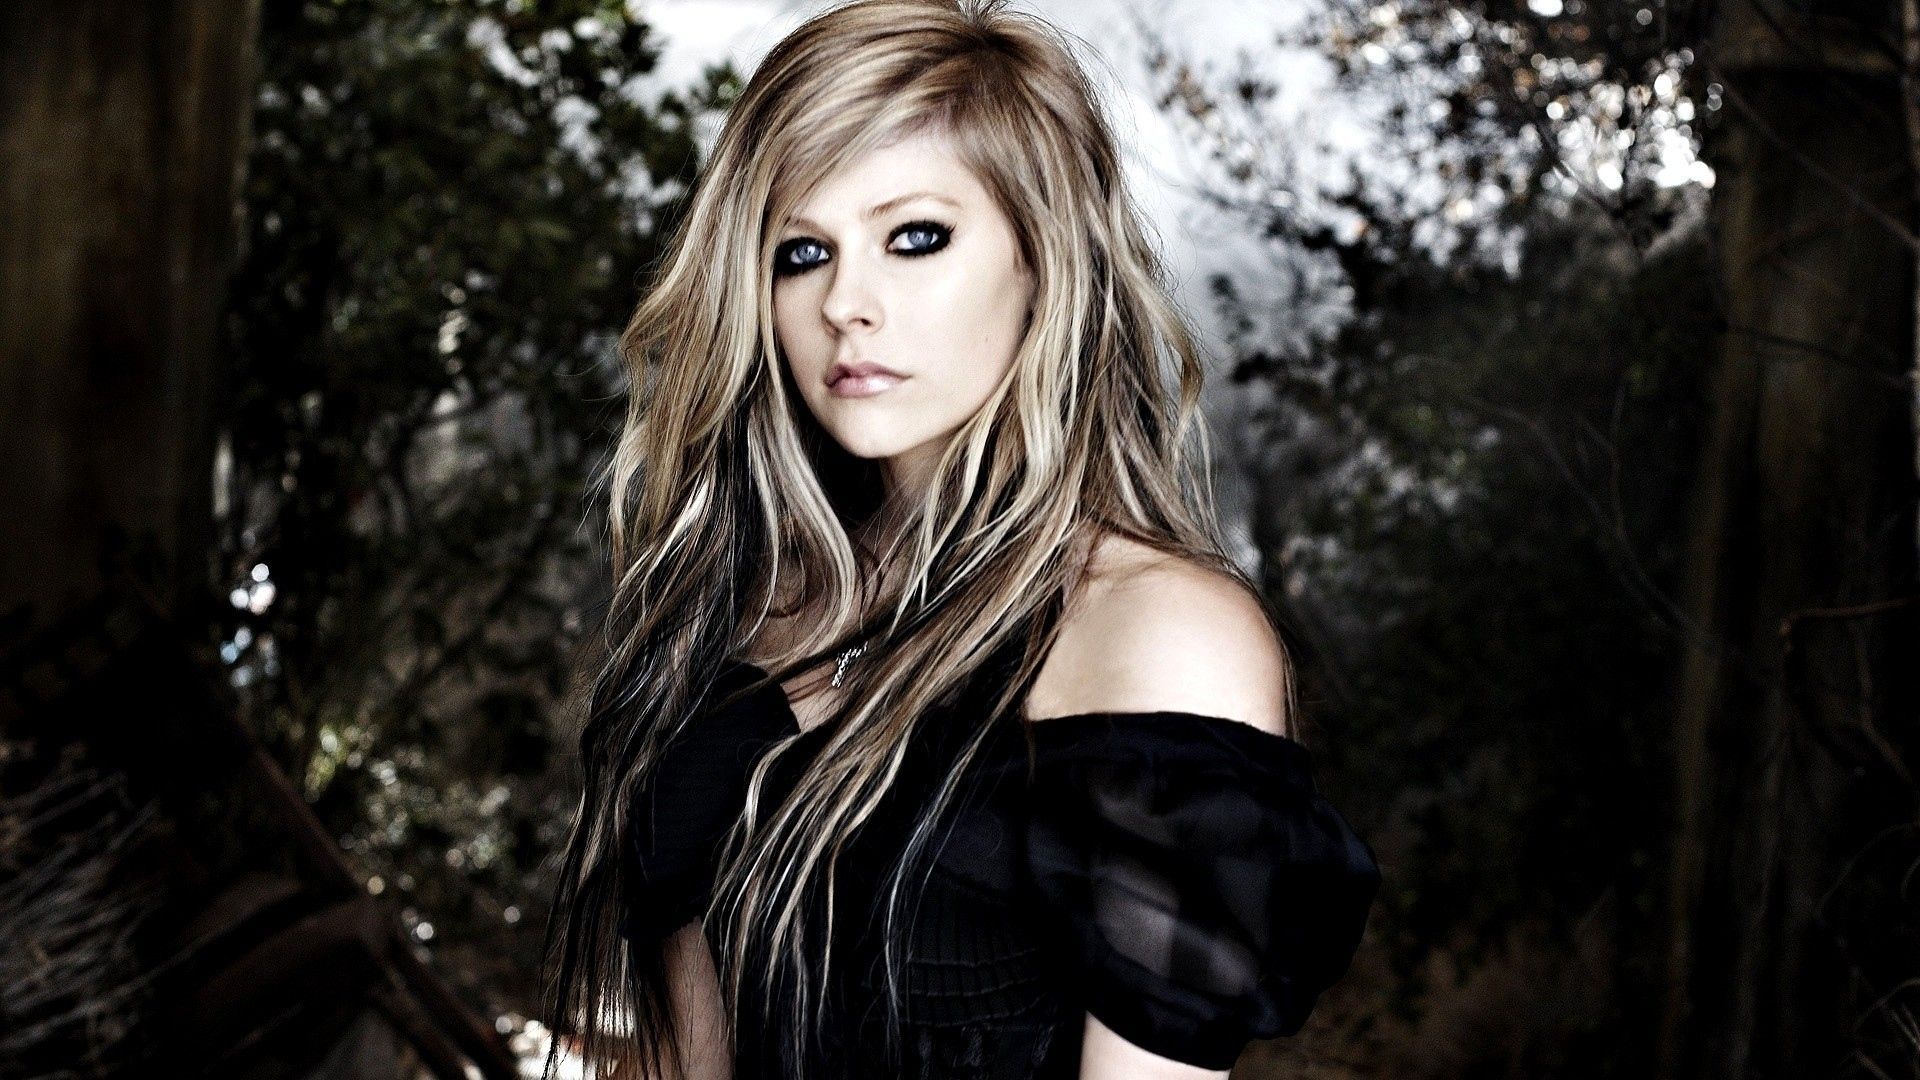 Avril Lavigne Wallpapers On Wallpaperdog